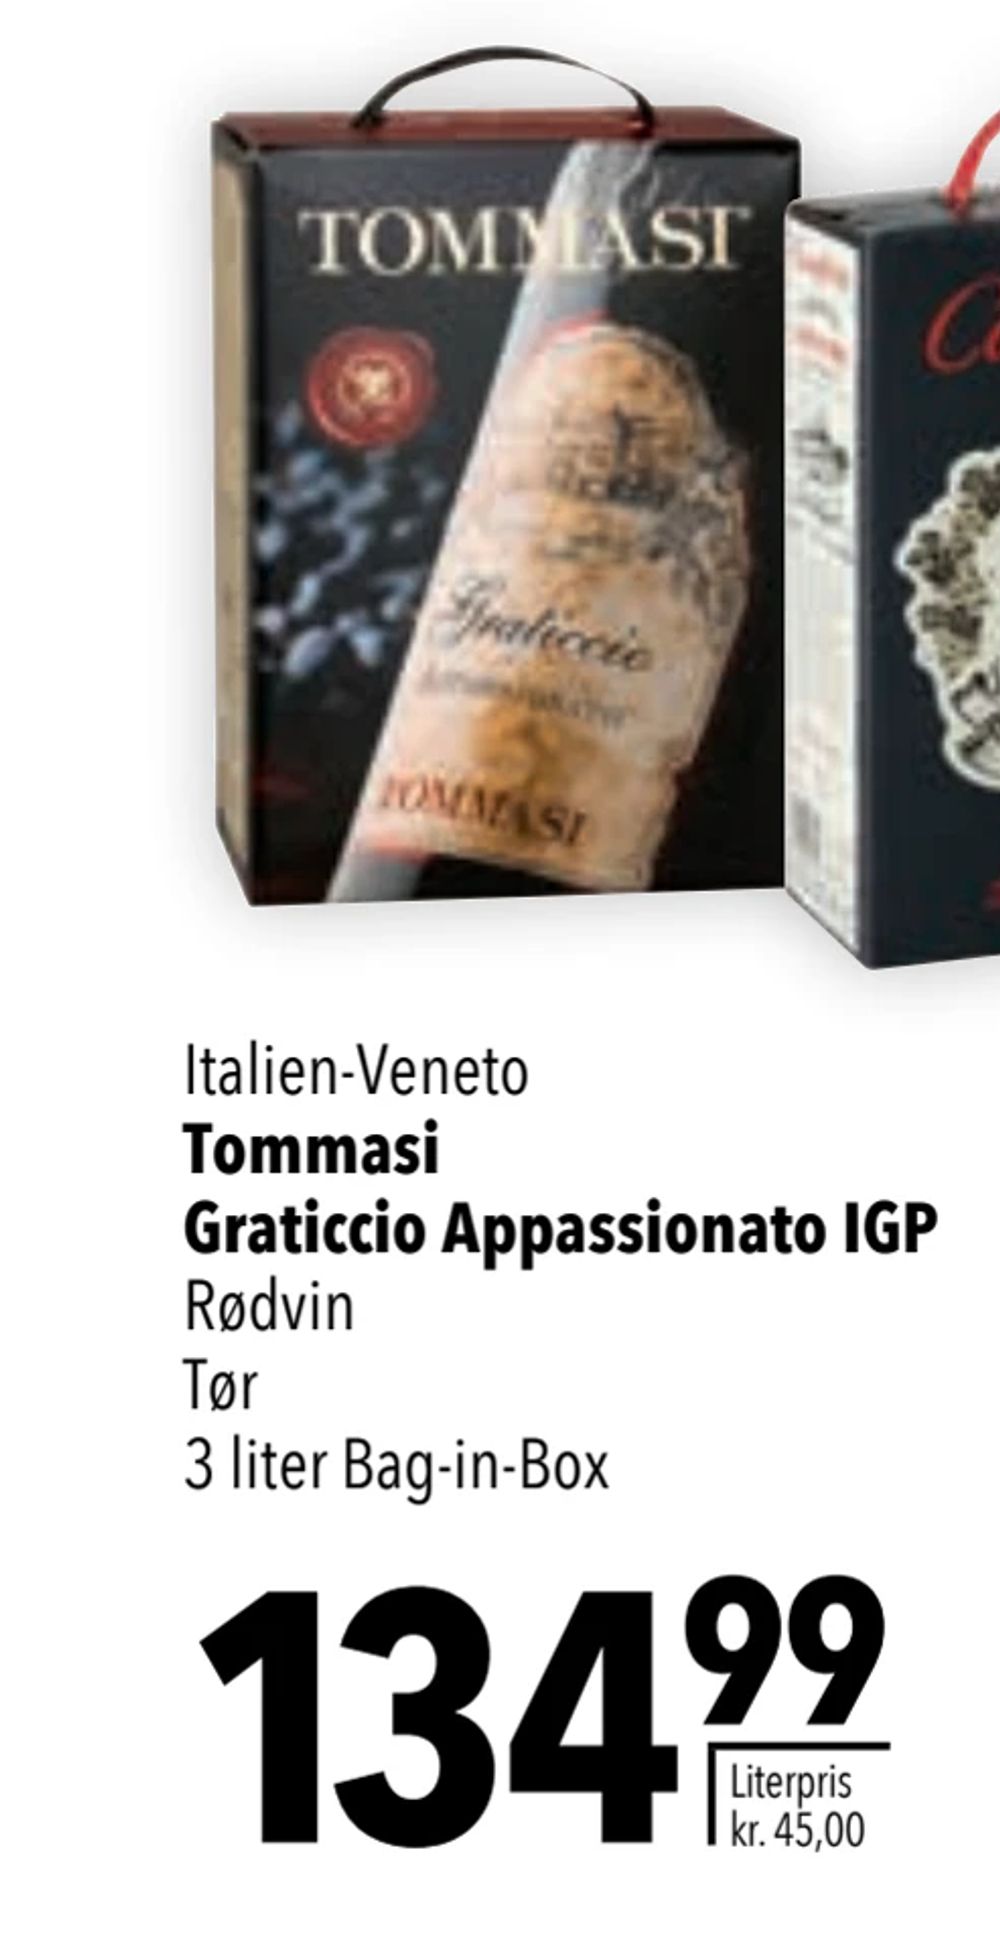 Tilbud på Tommasi Graticcio Appassionato IGP fra CITTI til 134,99 kr.